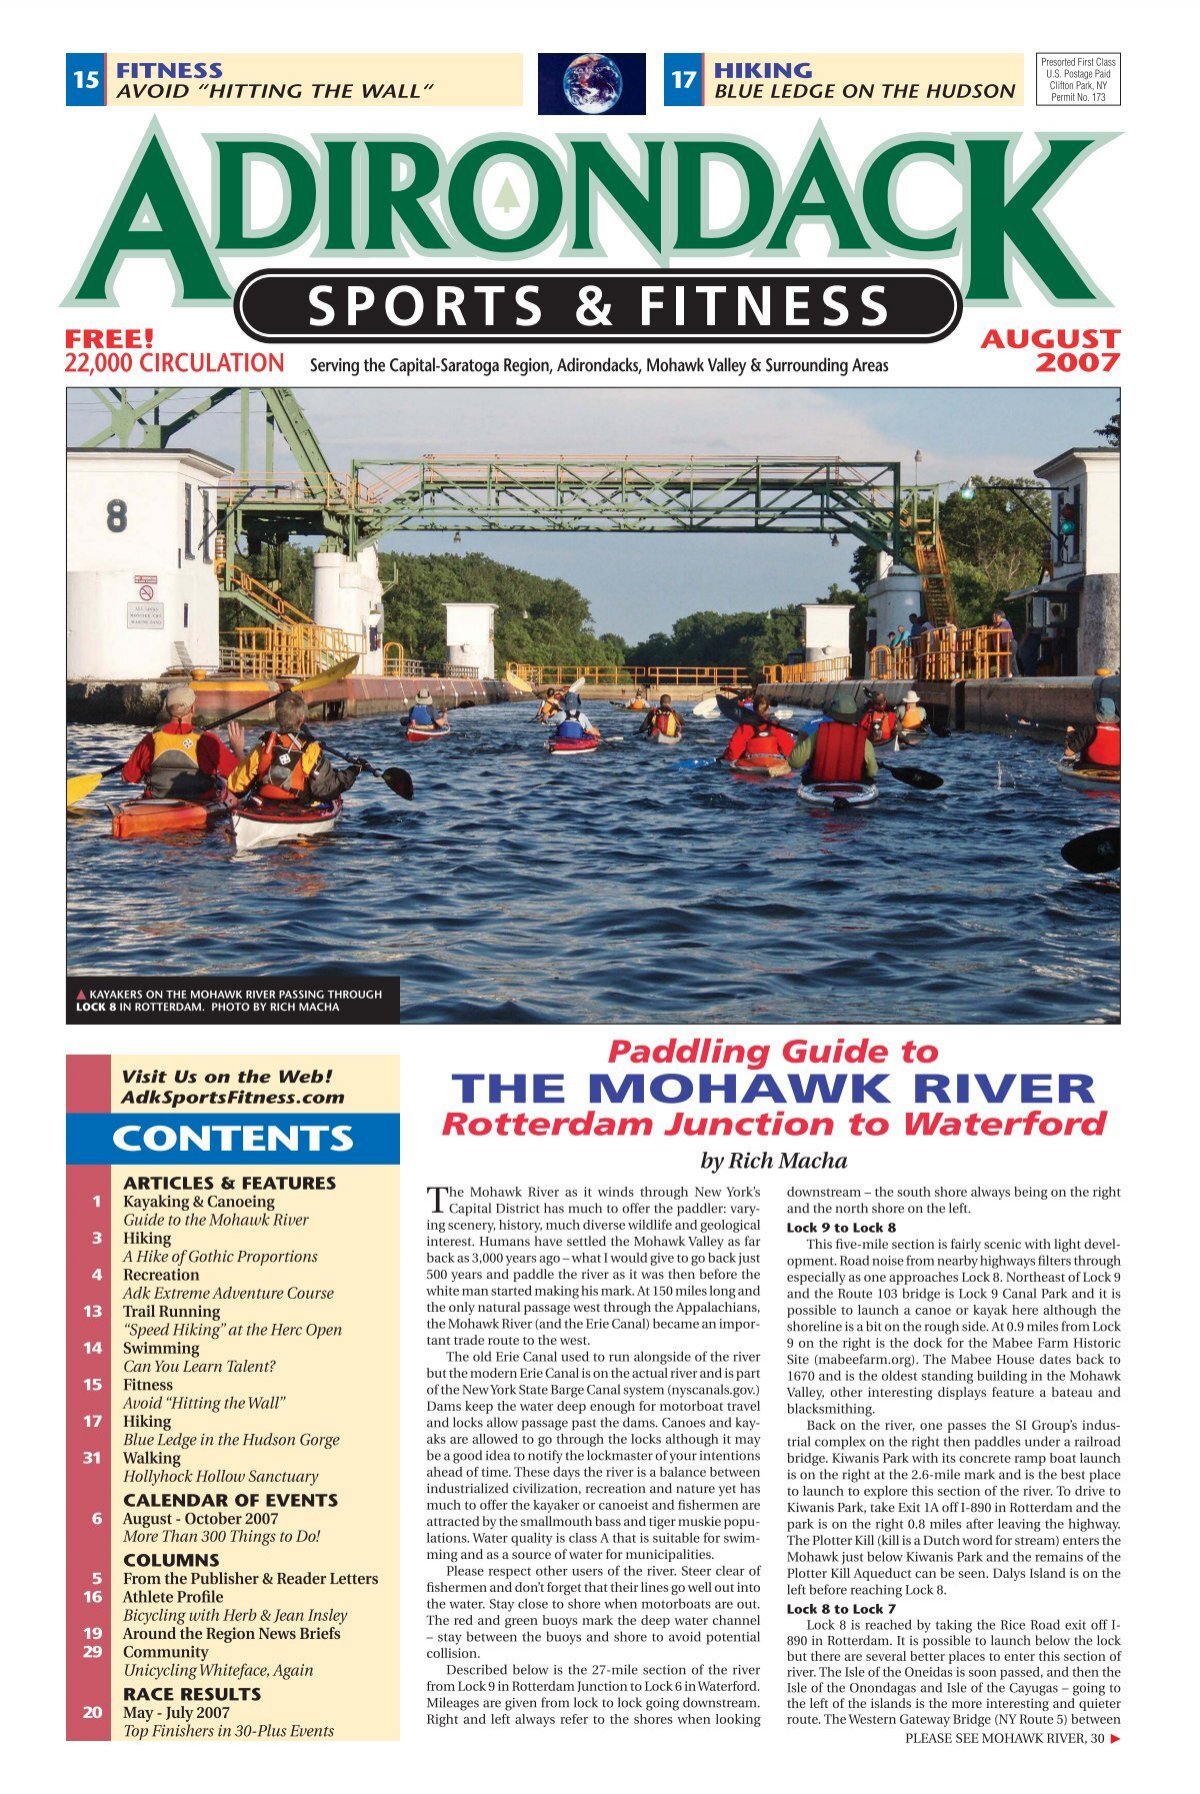 THE MOHAWK RIVER - Adirondack Sports & Fitness